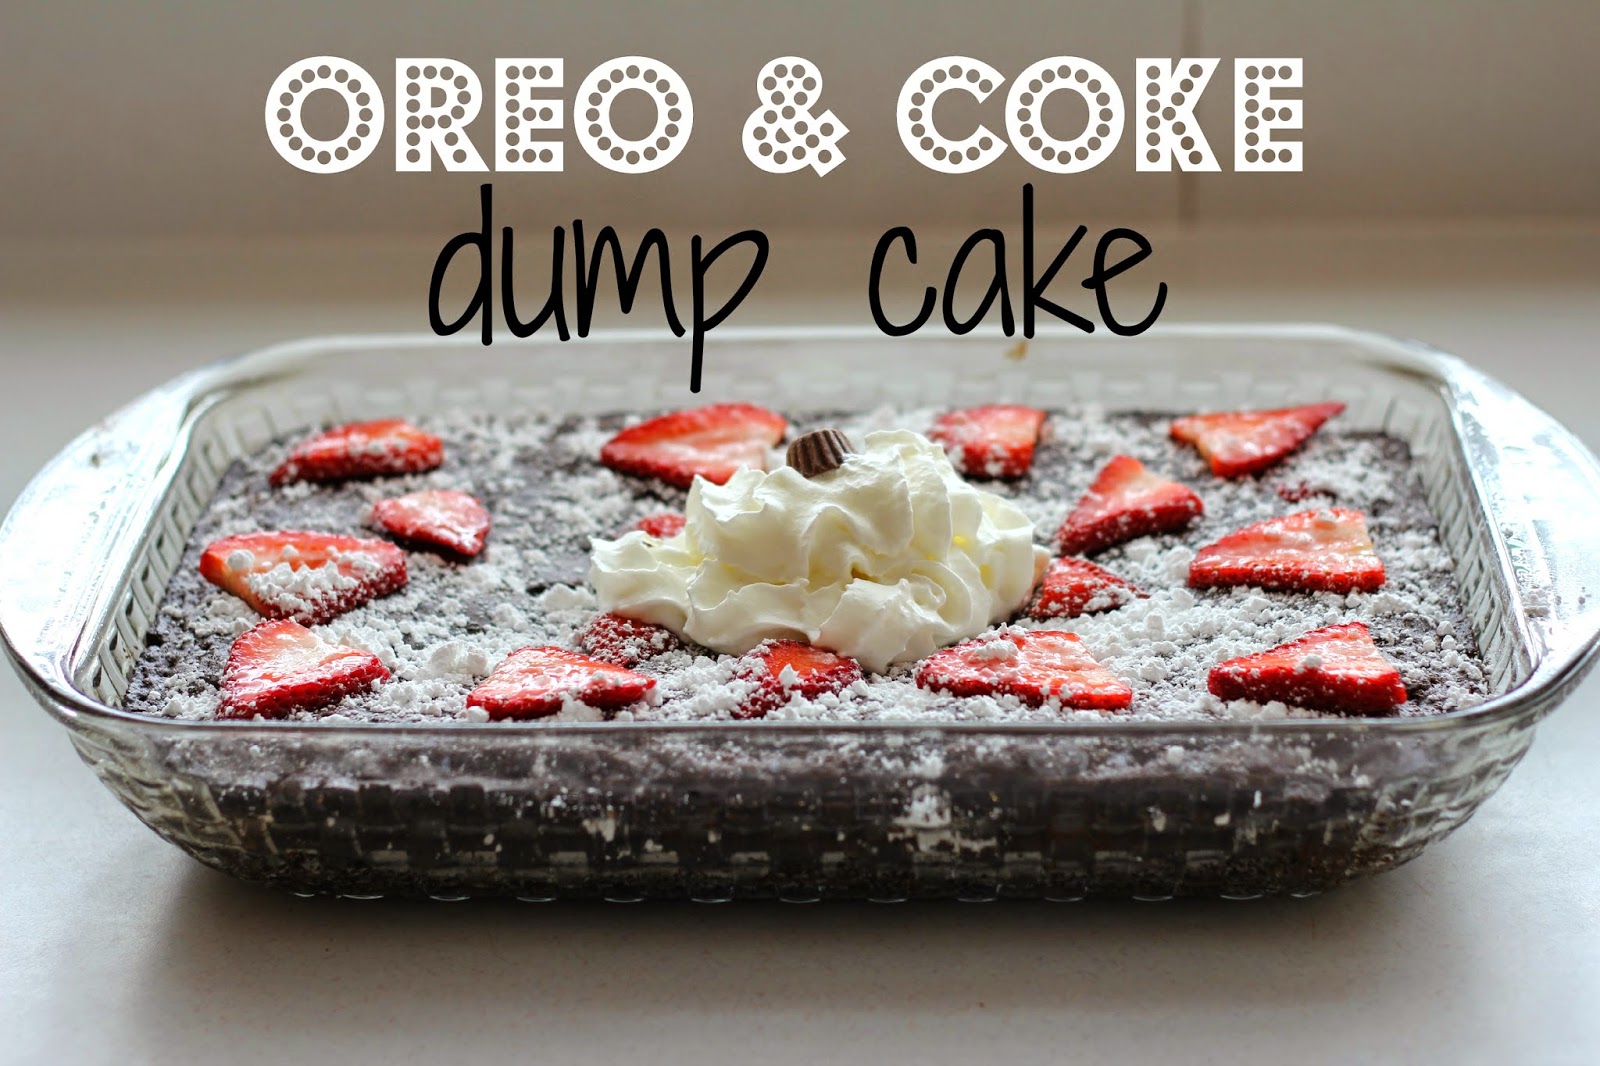 Potluck Recipes - Oreo & coke dump cake